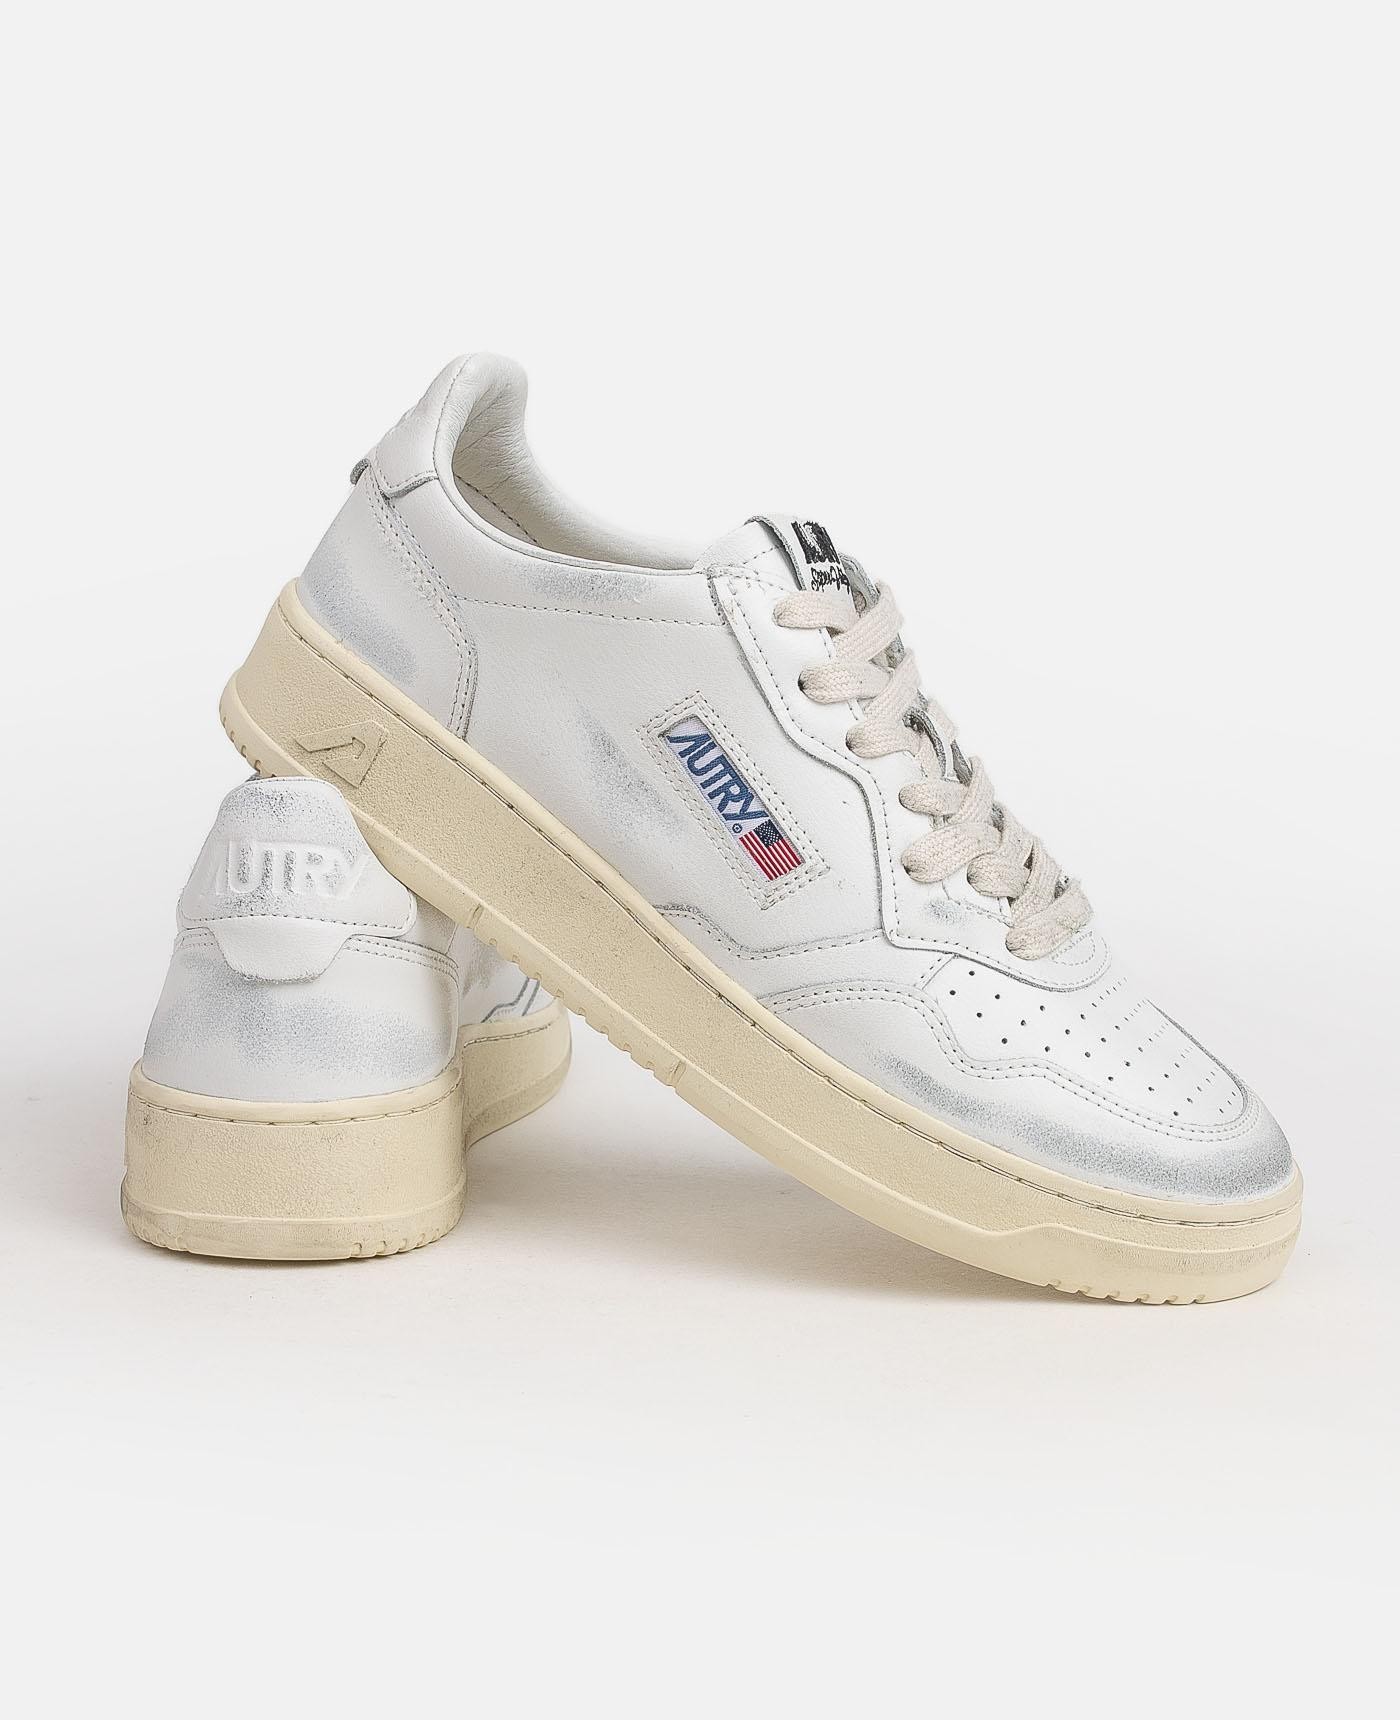 autry-zapatillas-aulm-ol01-sneakers-white-blancas-5